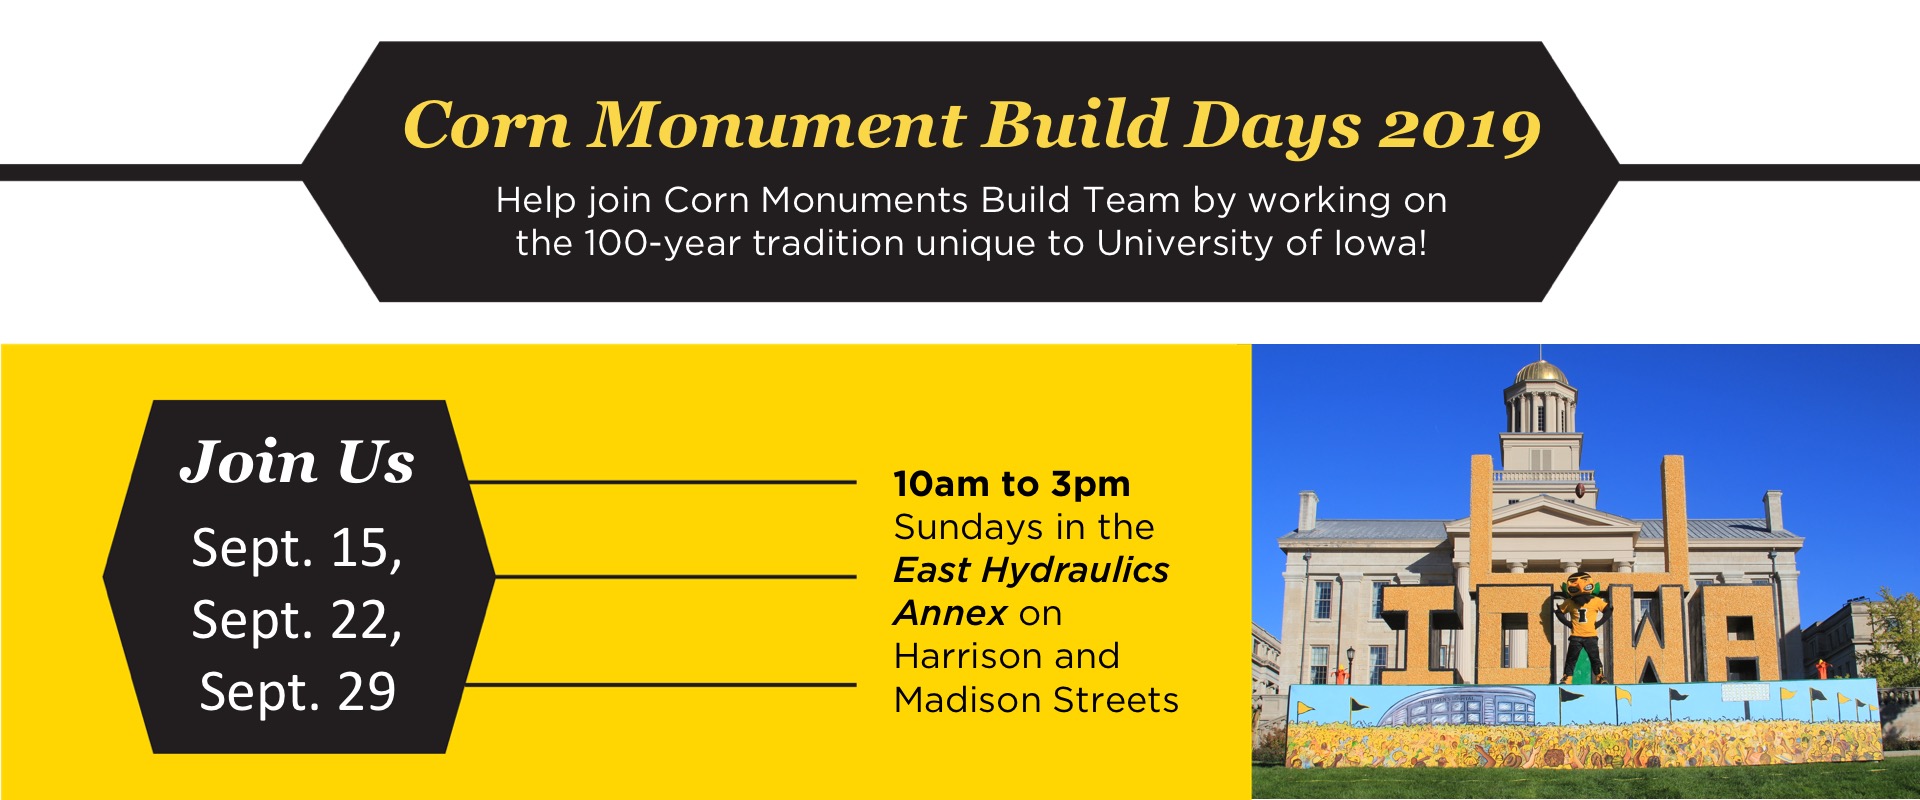 Corn Monument Build Days 2019